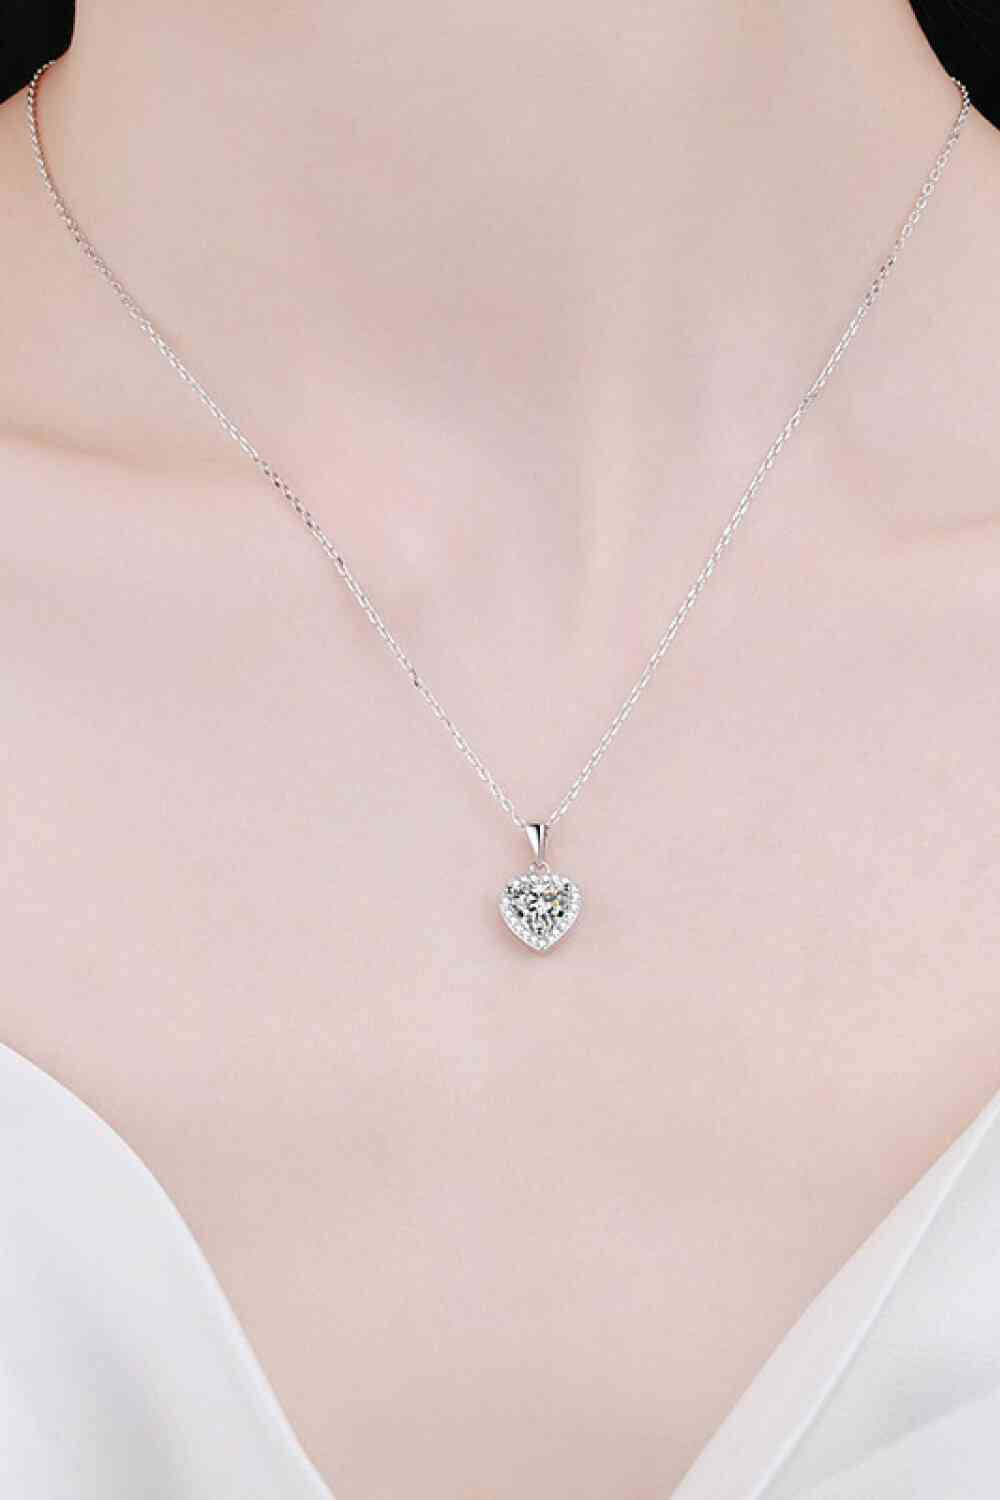 1 Carat Moissanite Heart Pendant Chain Necklace Ti Amo I love you